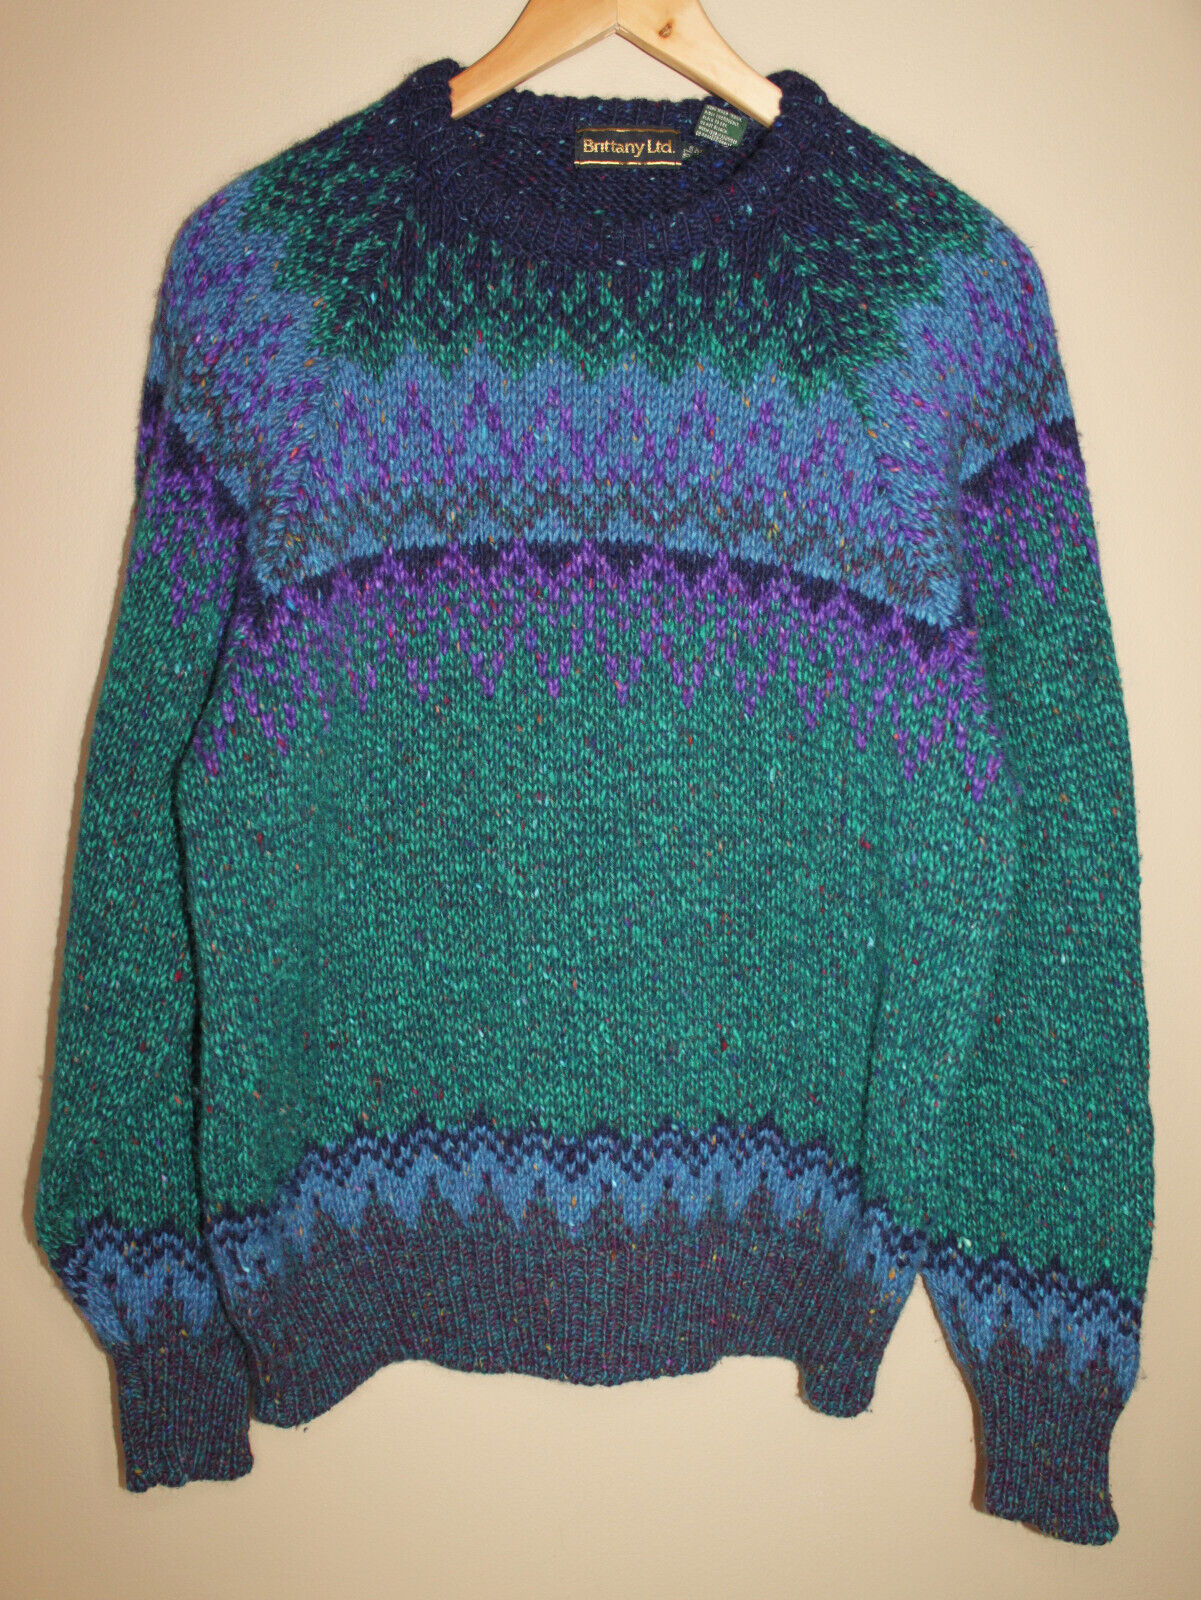 Vintage IRISH Brittany Ltd Men\'s  Knitted Wool Green Sweater Made in Ireland